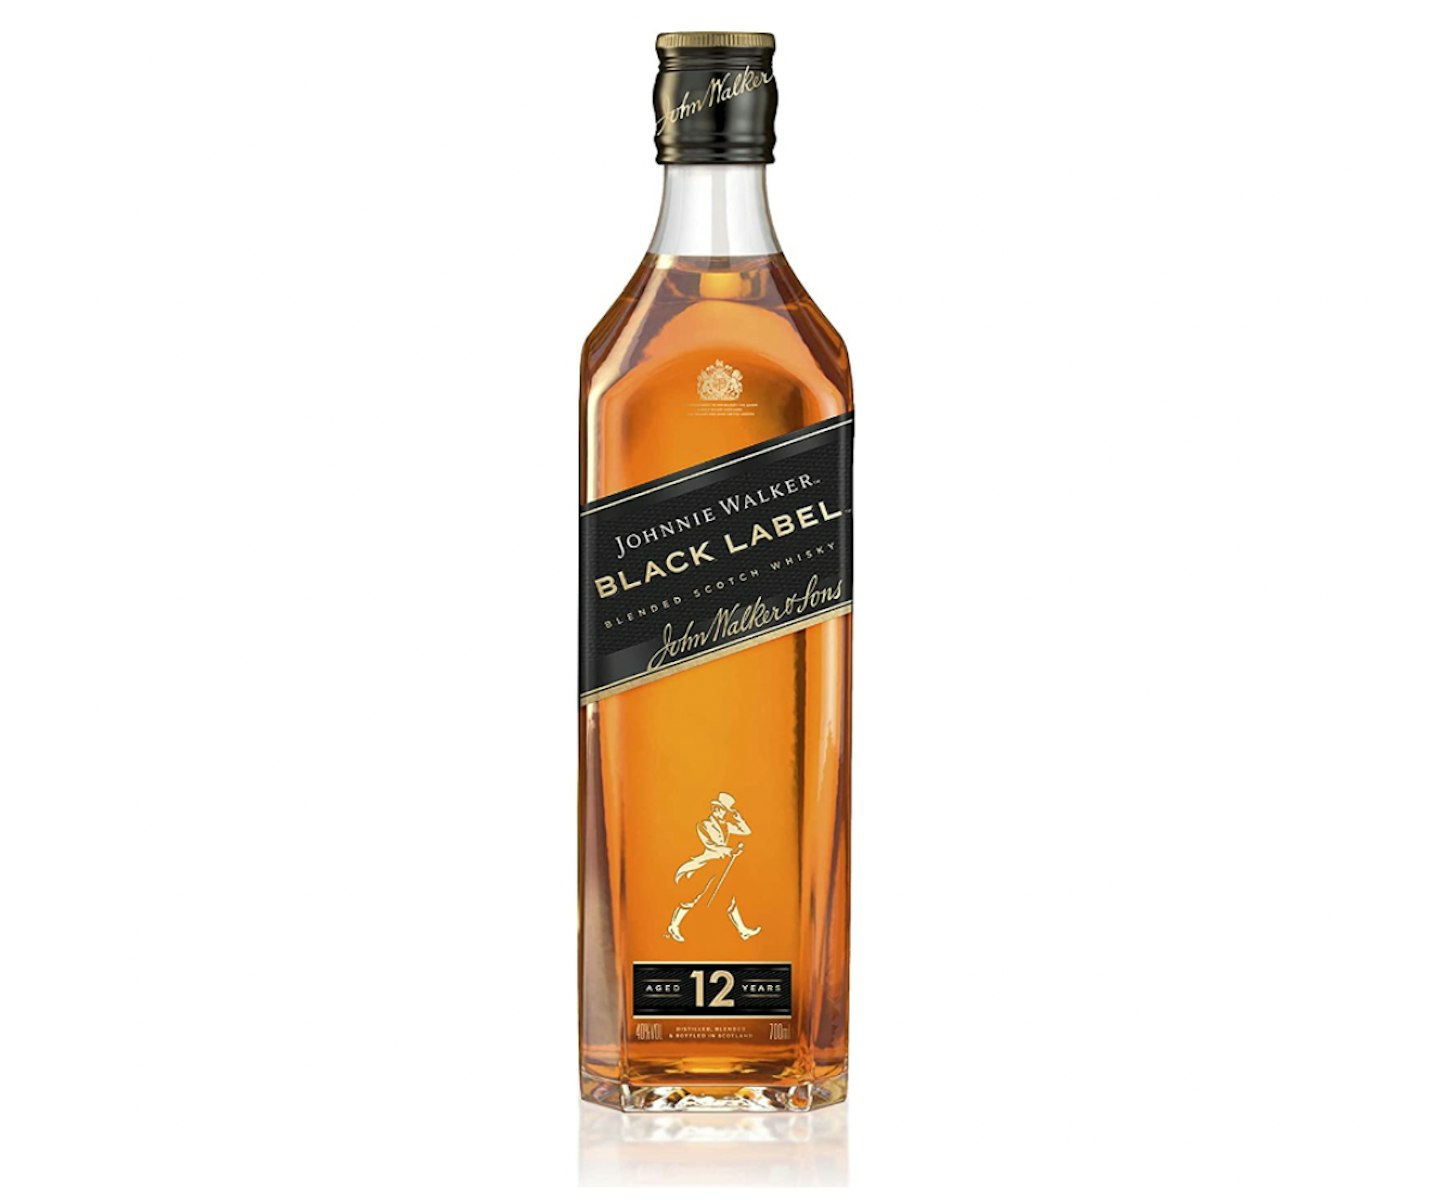  Johnnie Walker Black Label Scotch Whisky